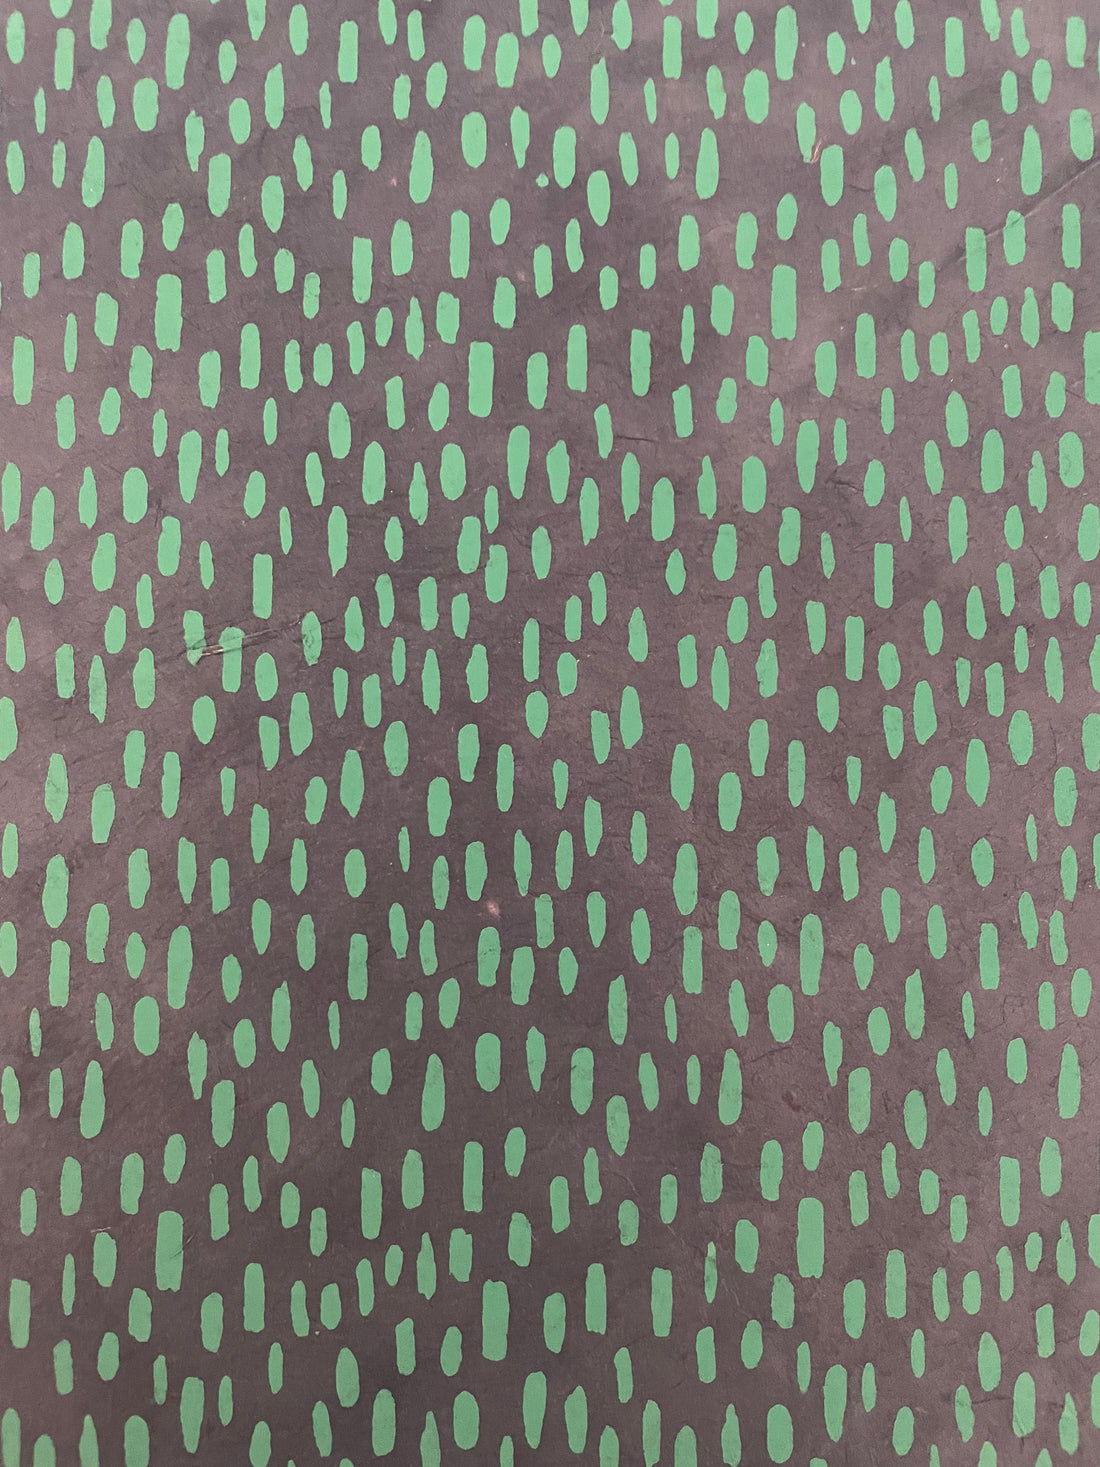 Handmade Paper - Blue w/ Green Lines